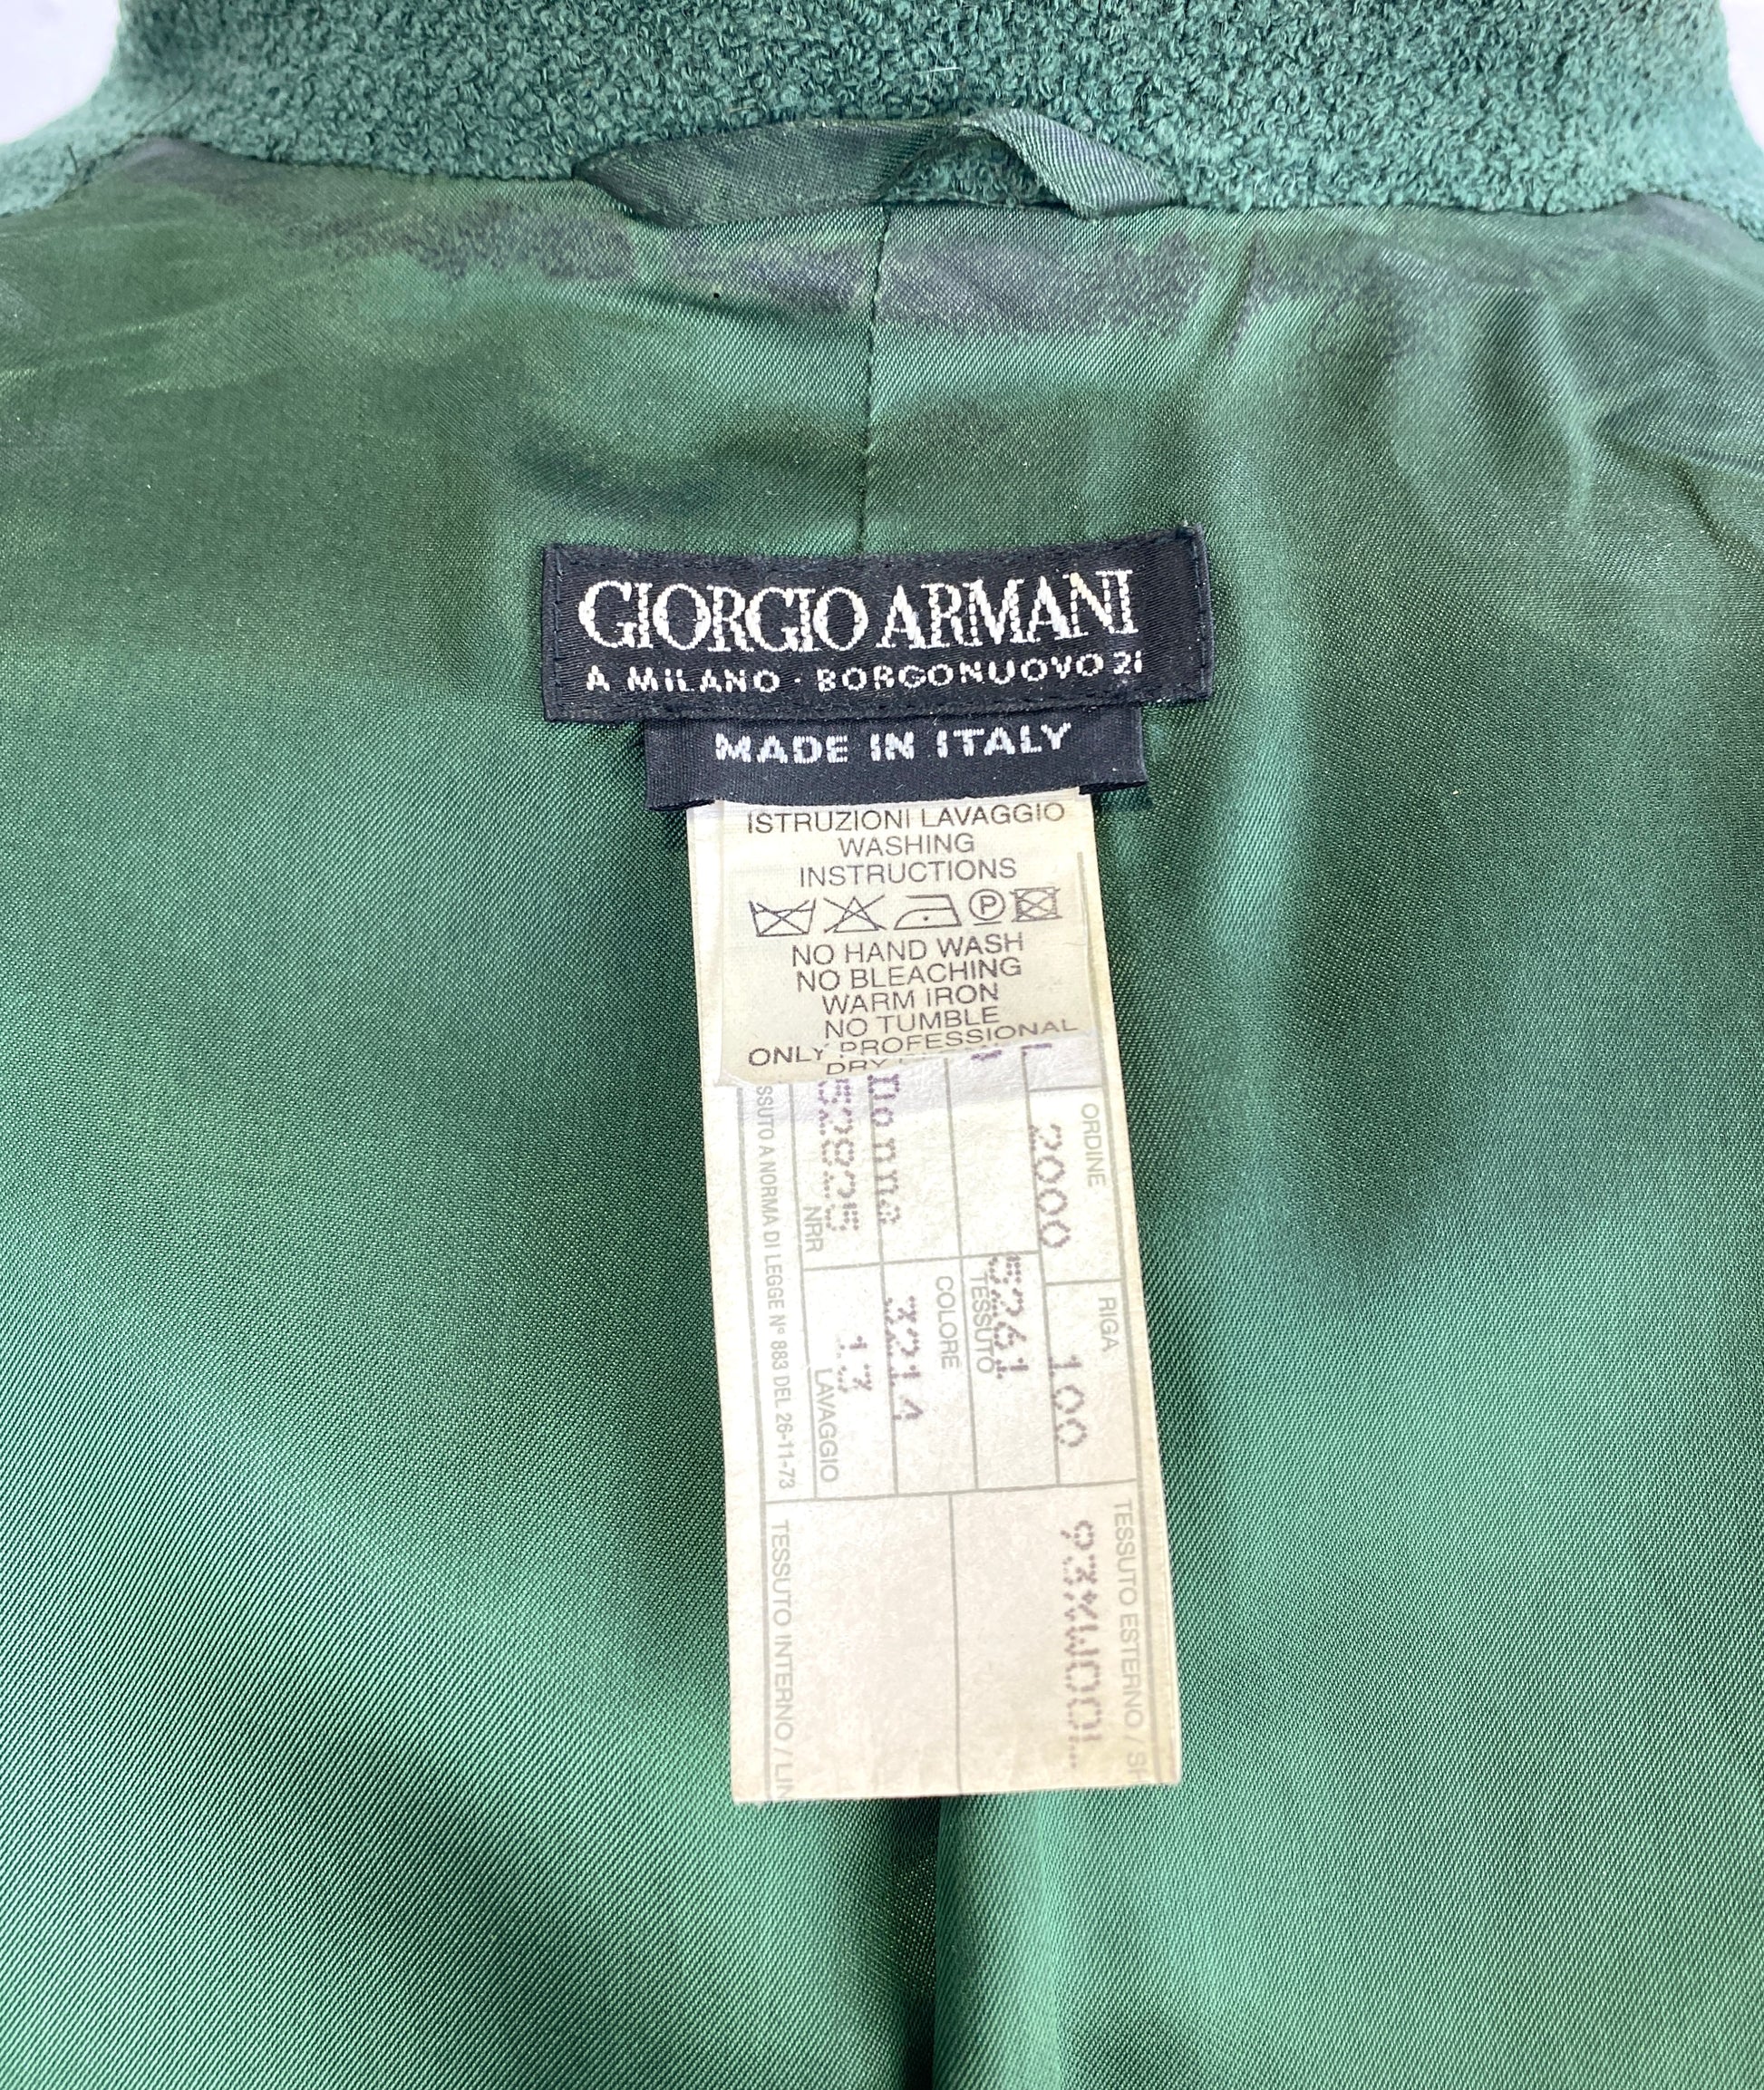 Vintage 1990s Green Bouclé Wool Giorgio Armani Blazer, B39"